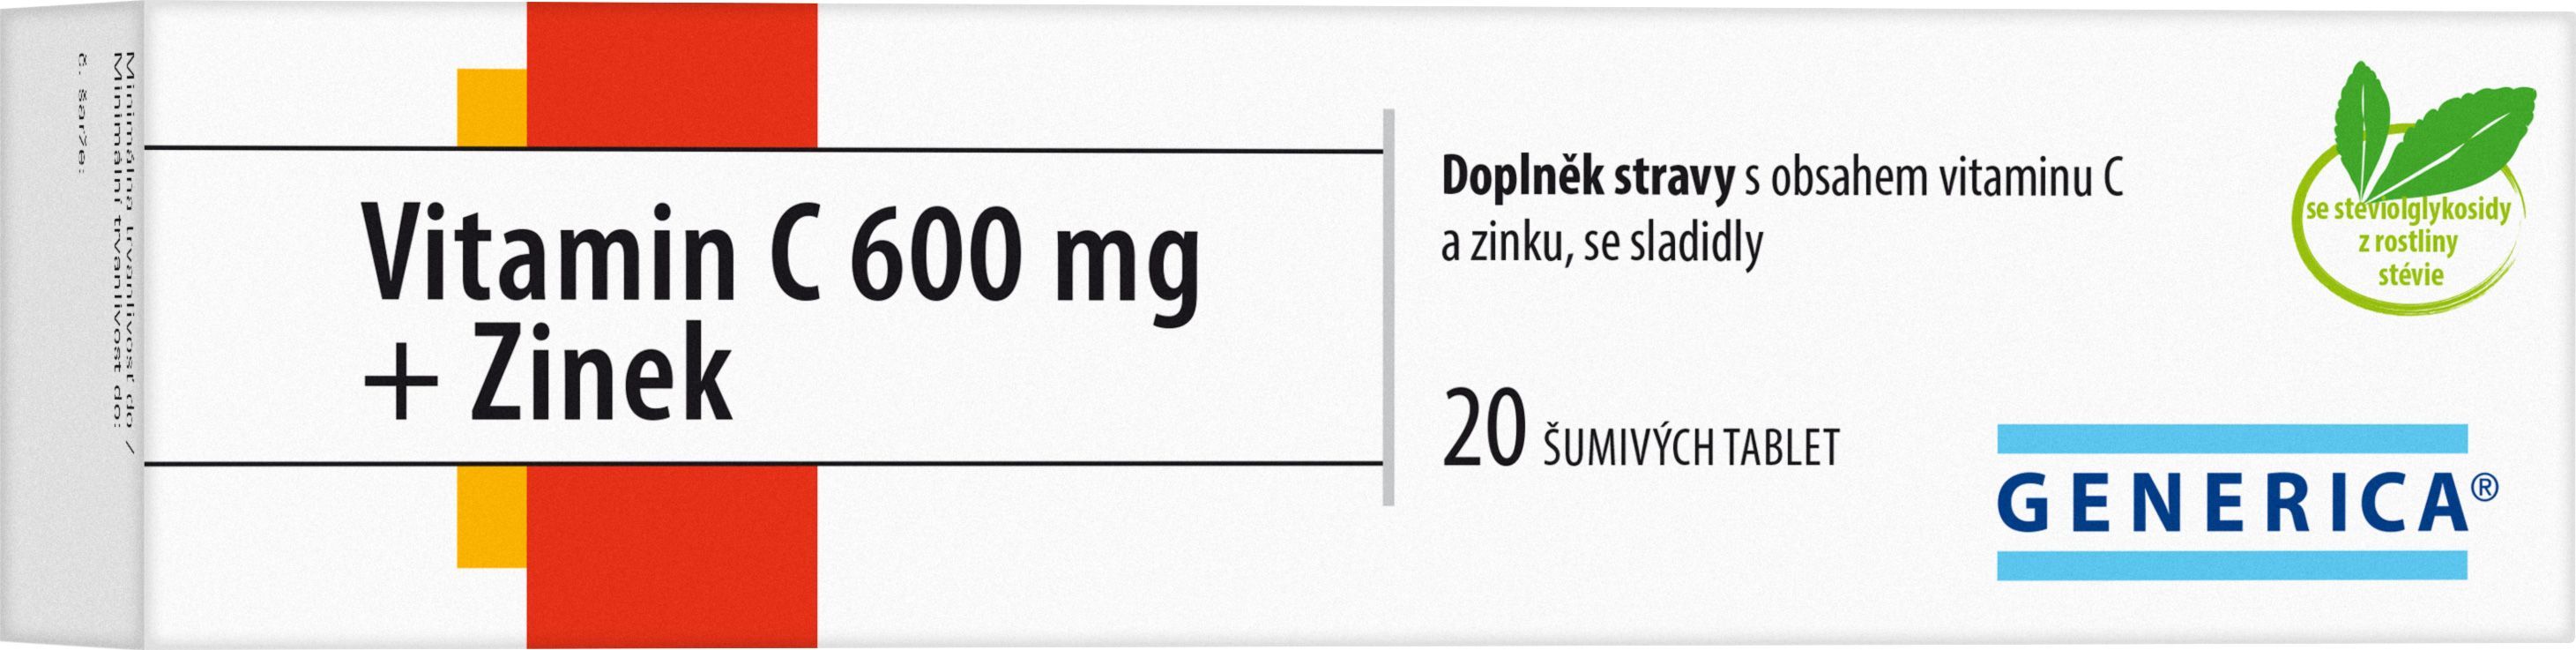 Generica Vitamin C 600 mg + Zinek 20 šumivých tablet Generica